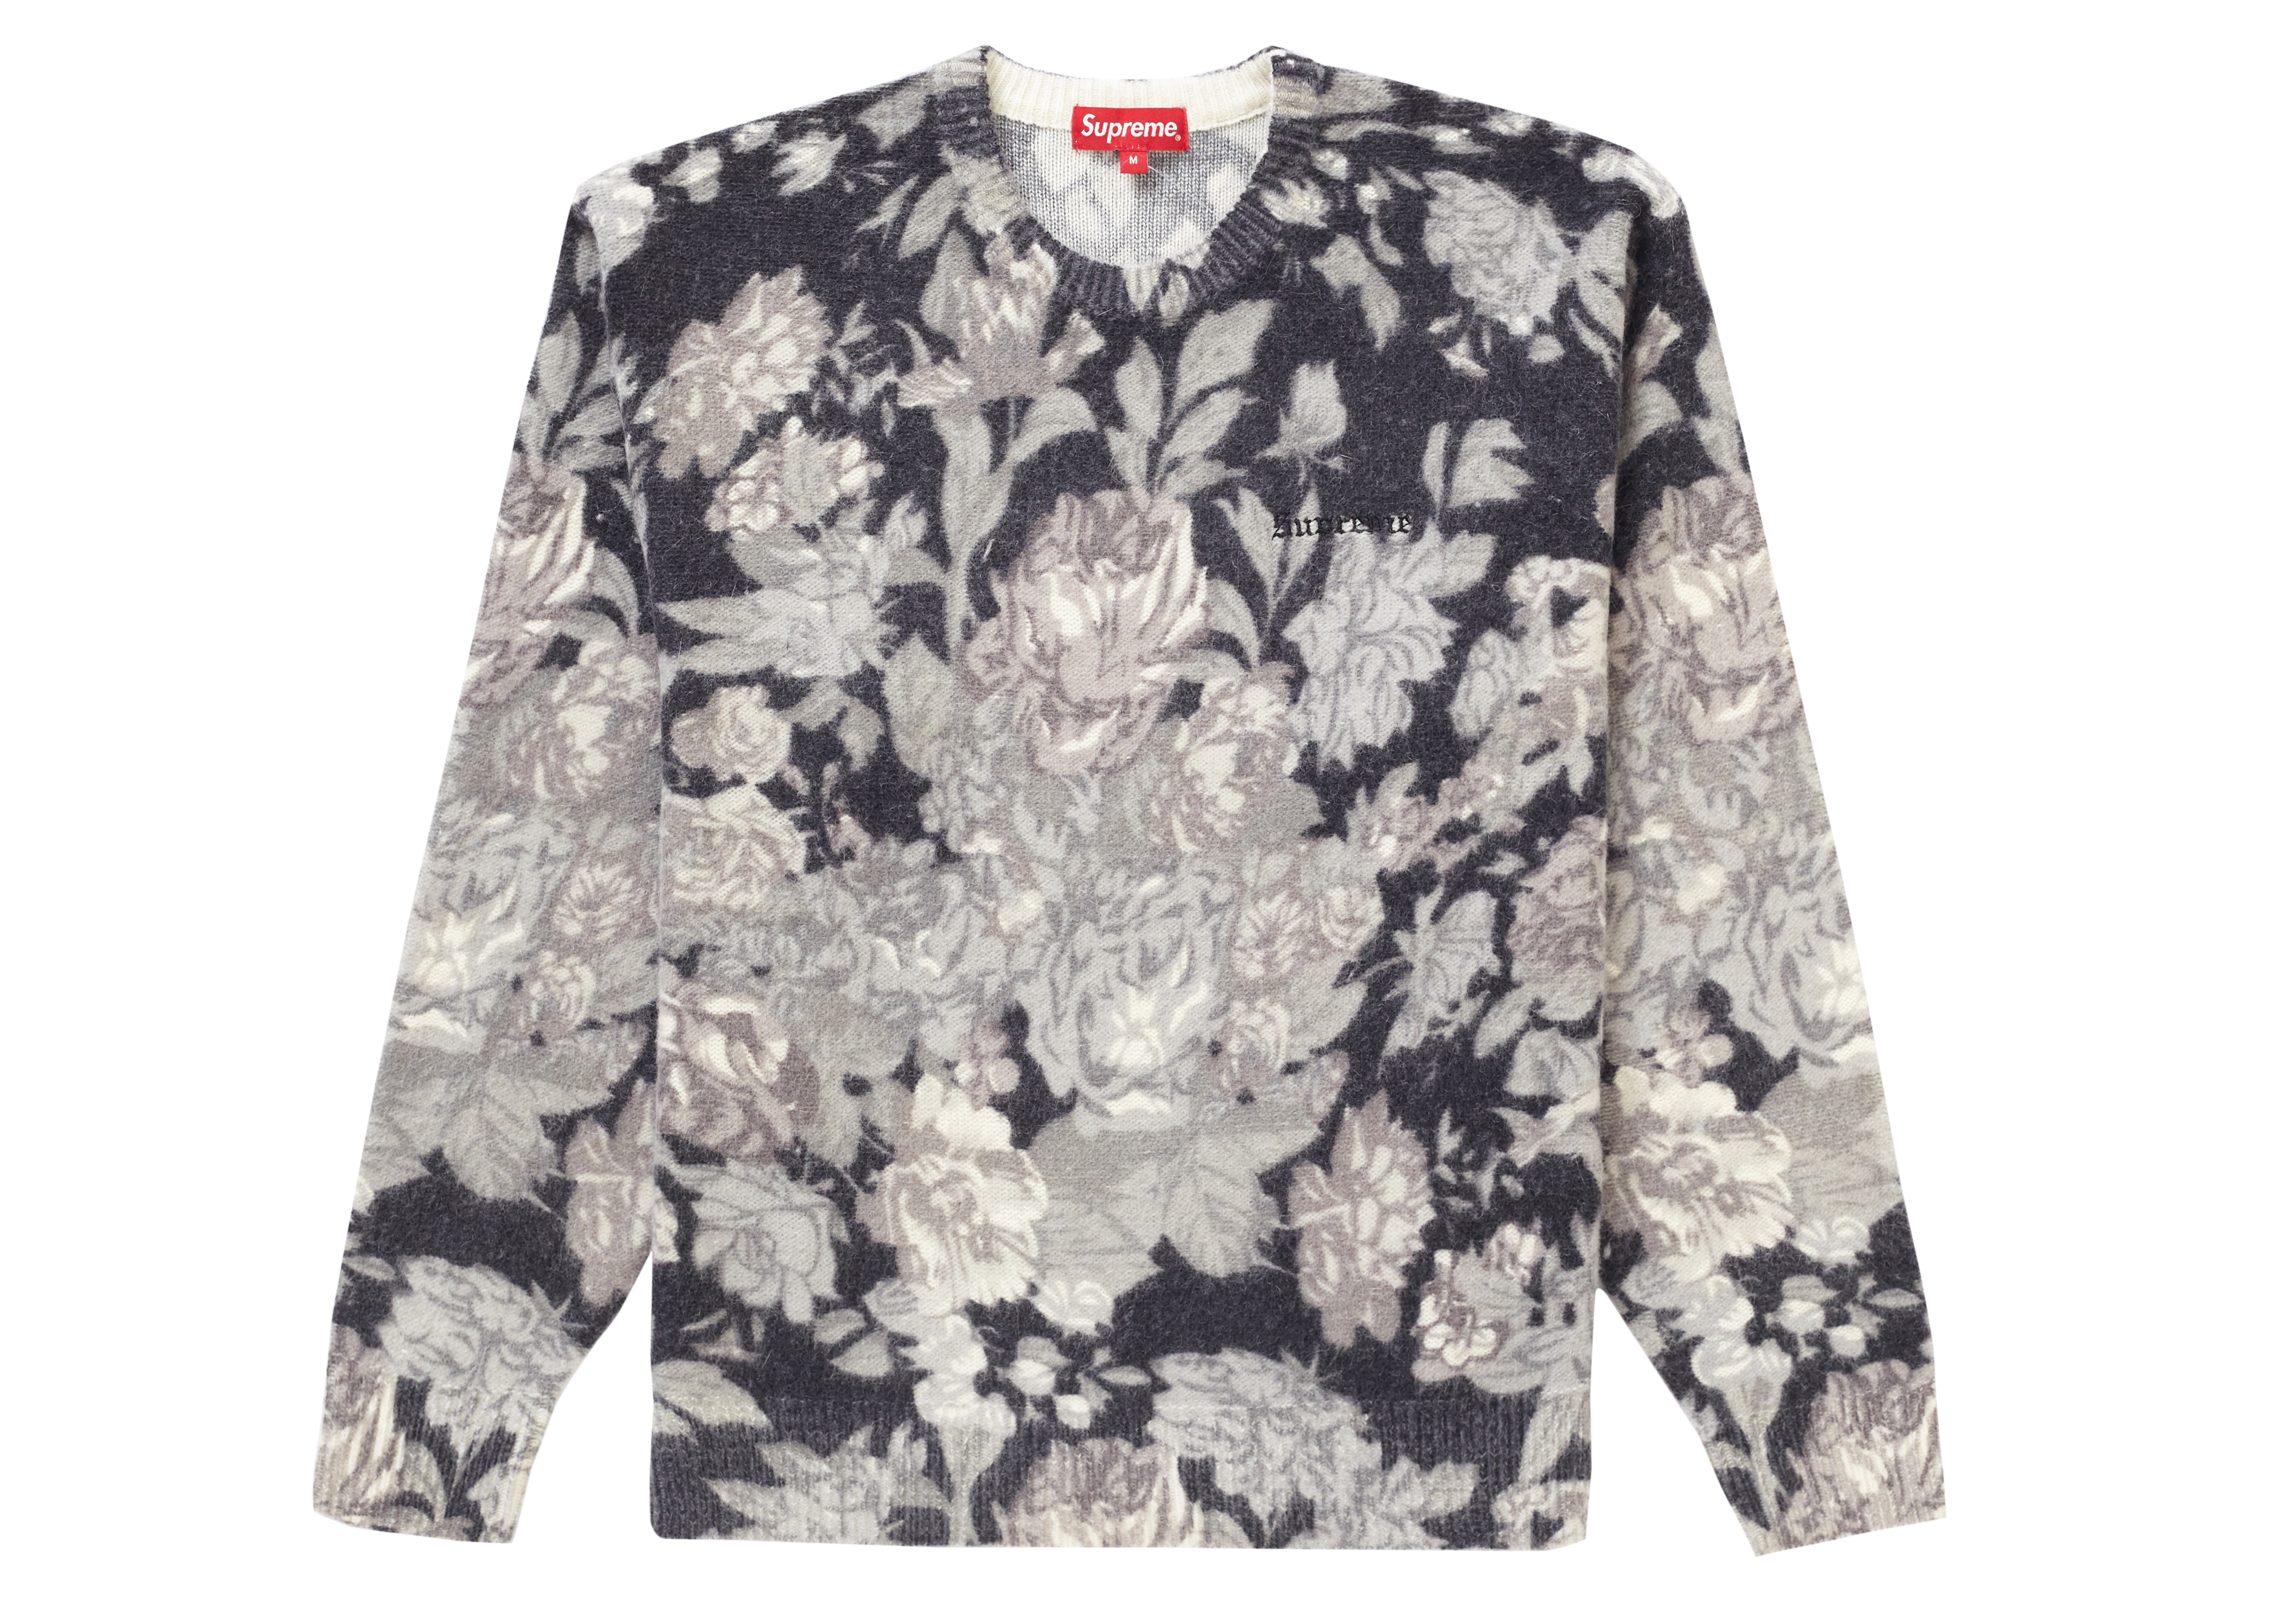 Printed Floral Angora Sweater